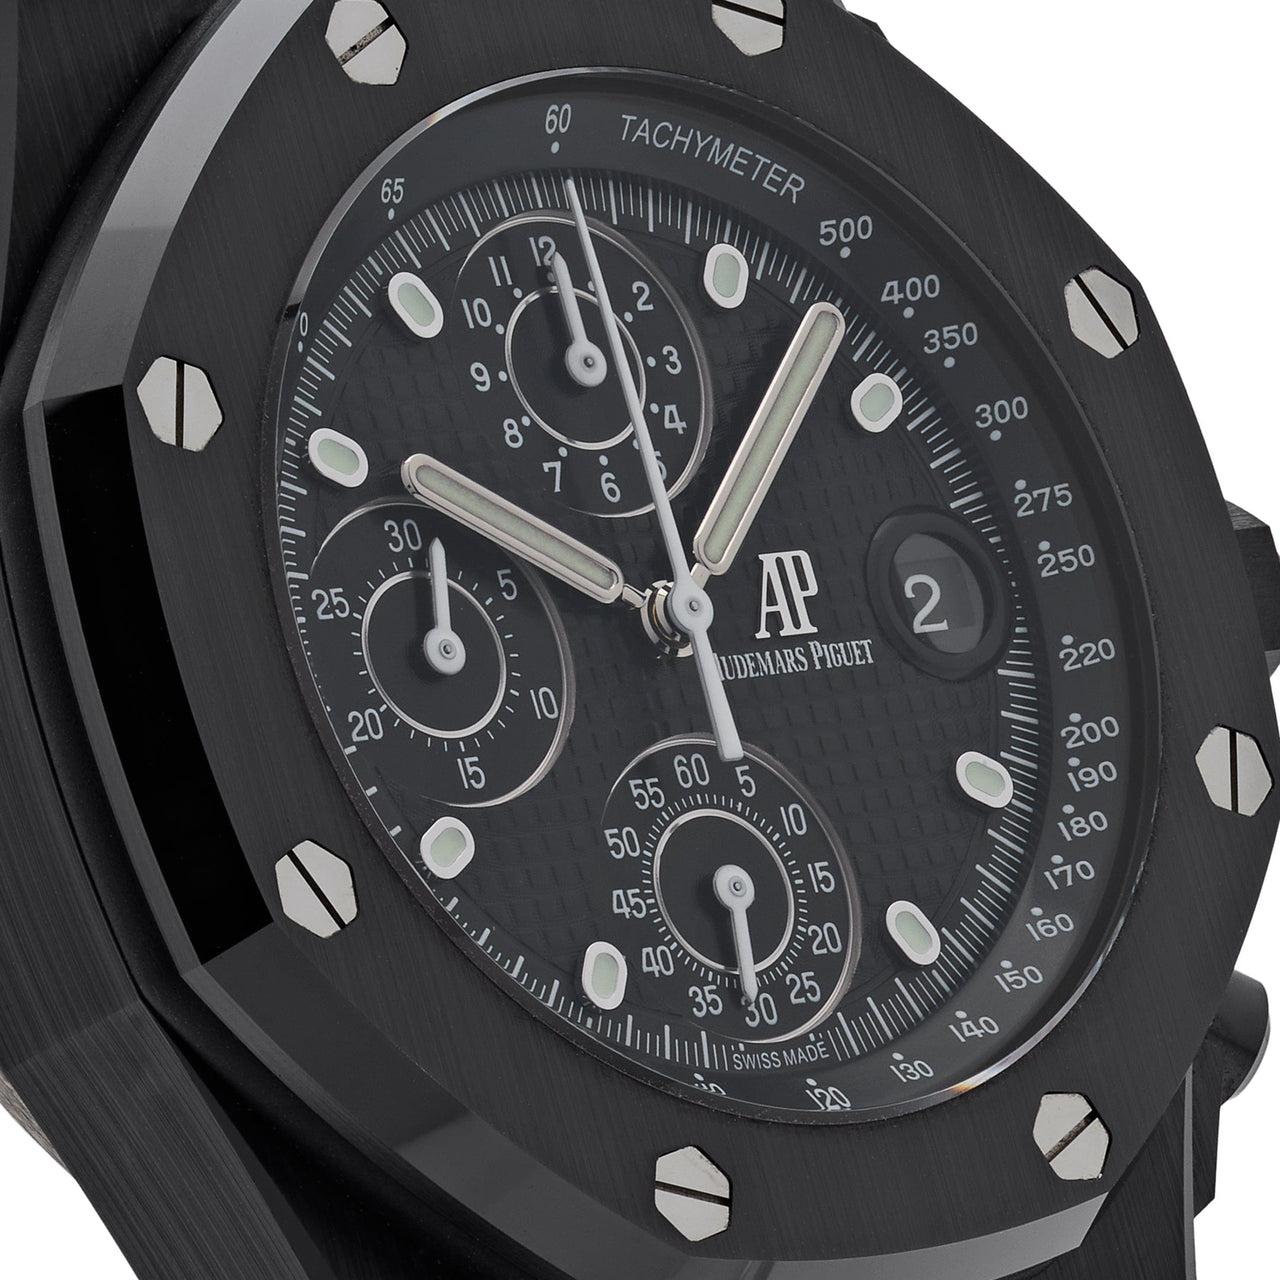 Luxury Watch Audemars Piguet Royal Oak Offshore Black Ceramic 26238CE.OO.1300CE.01 Wrist Aficionado